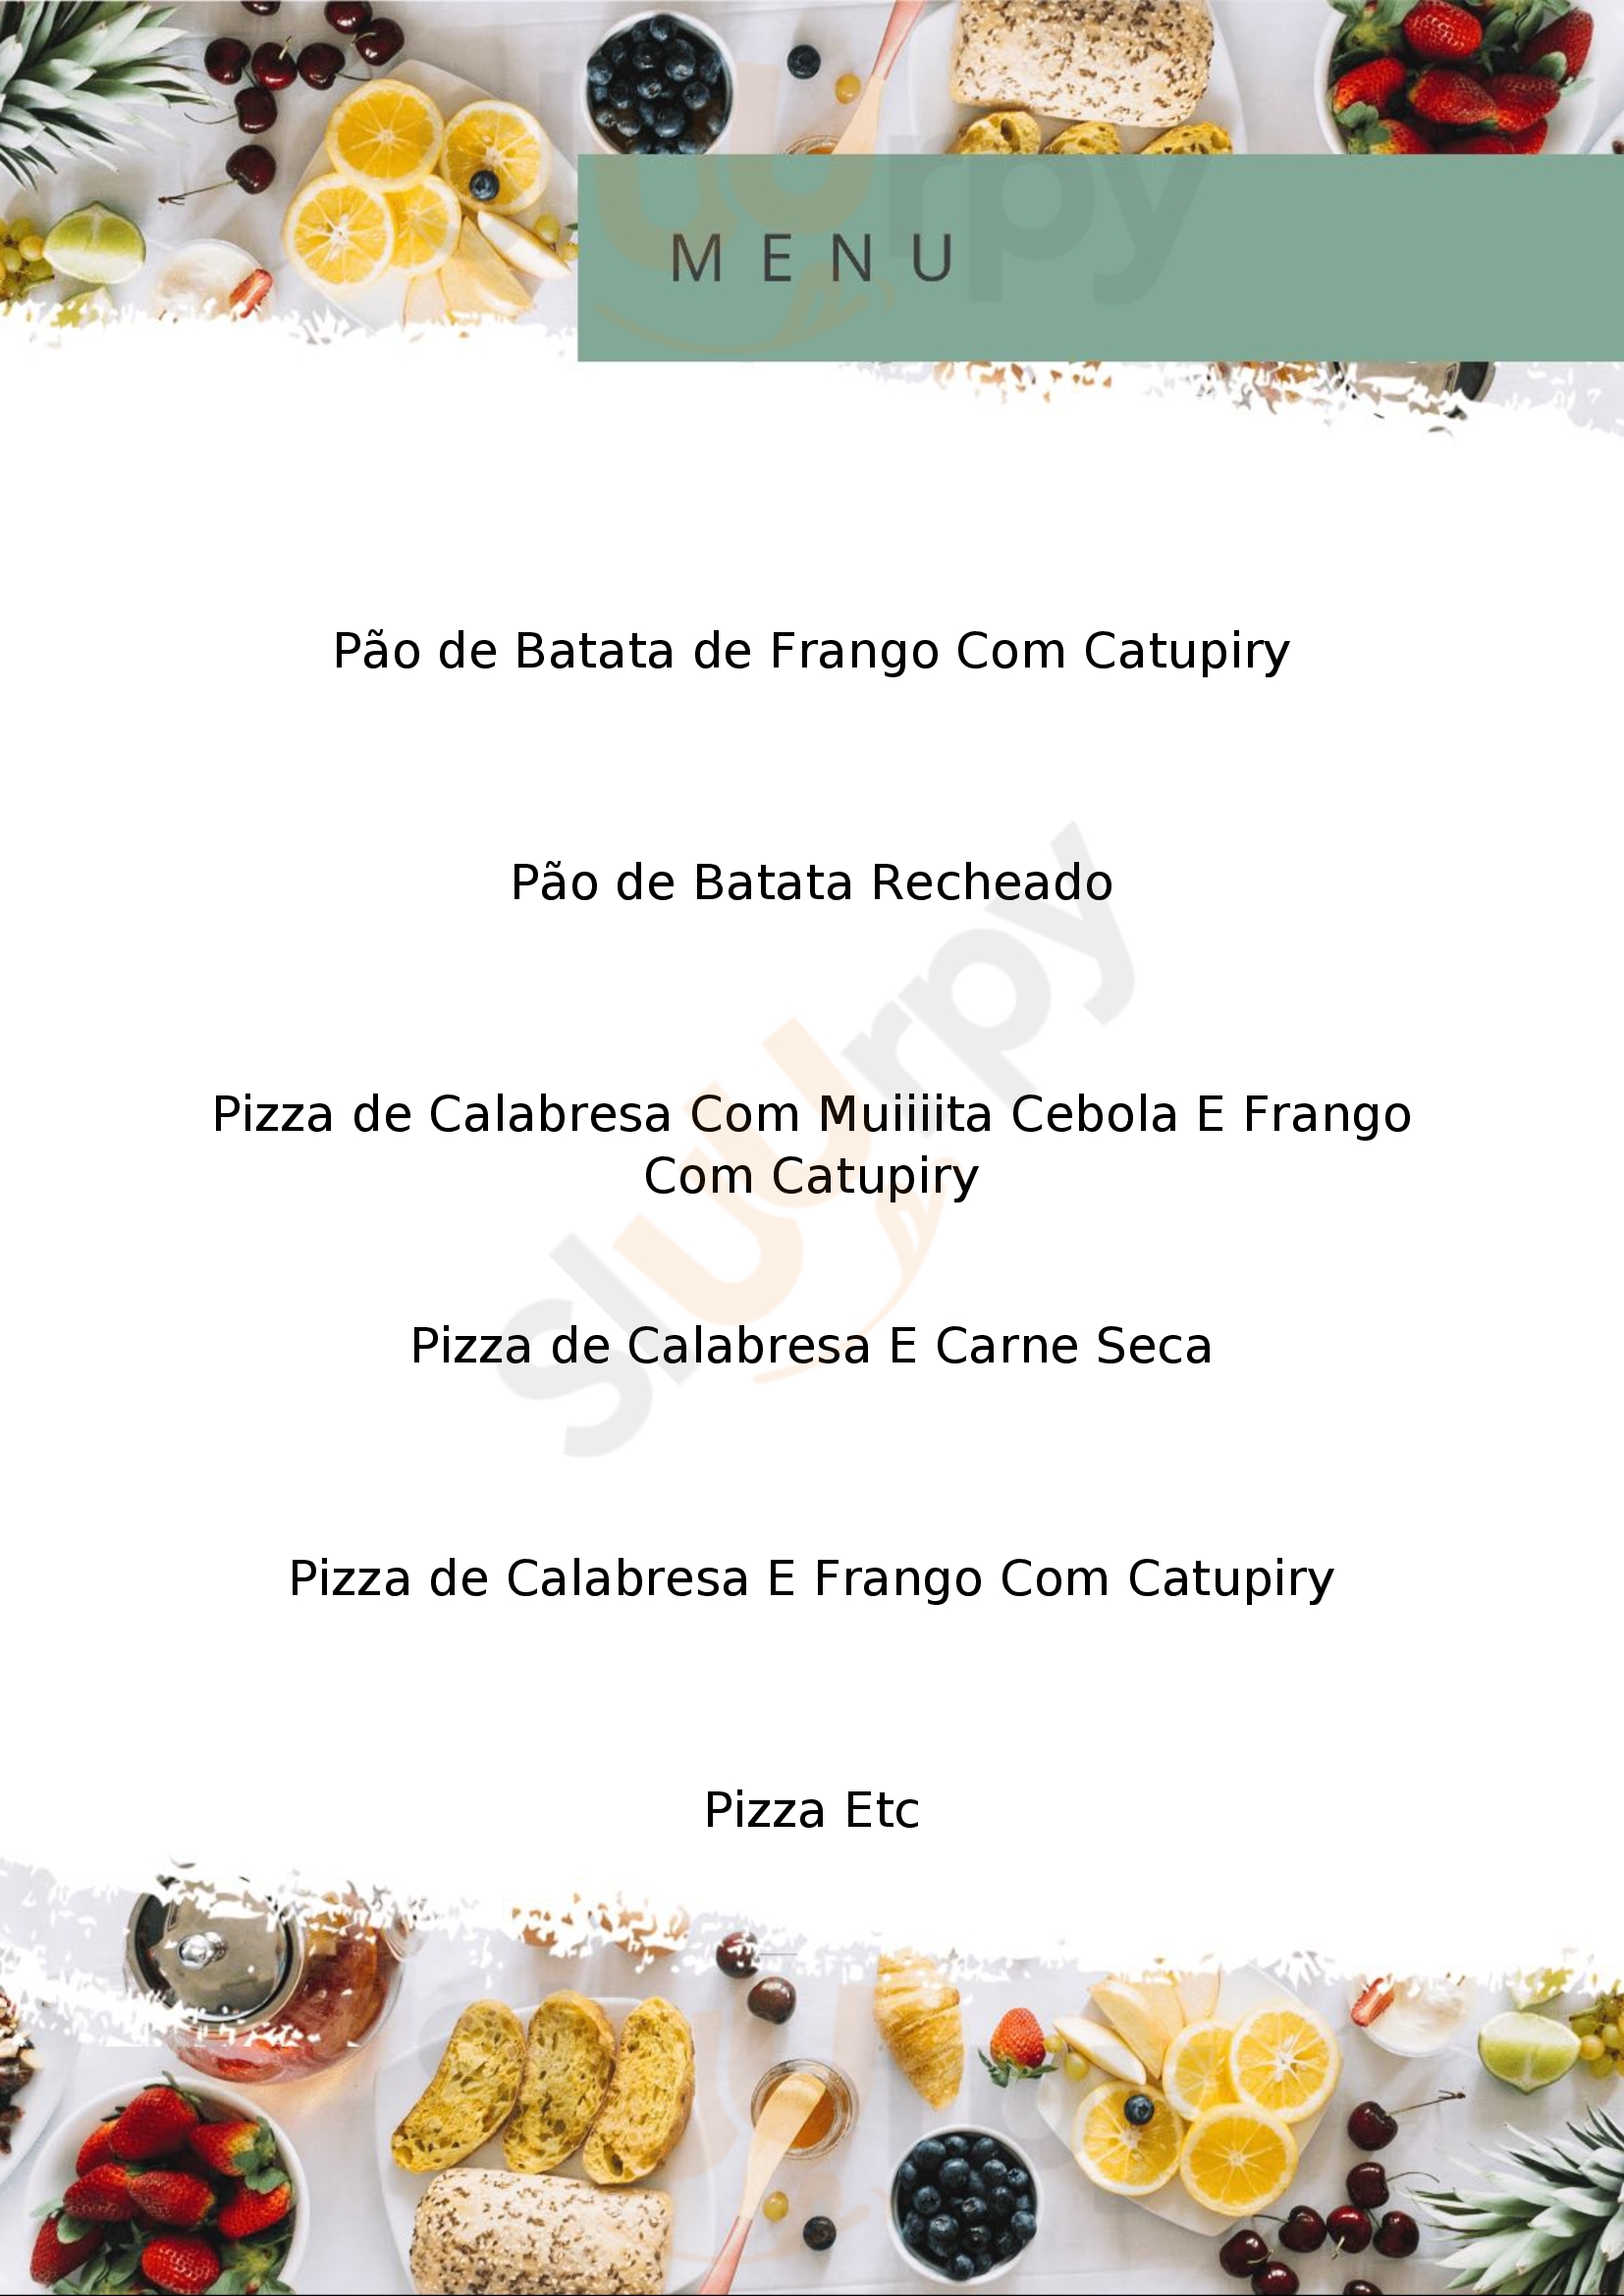 Pizza Etc Iguaba Grande Menu - 1